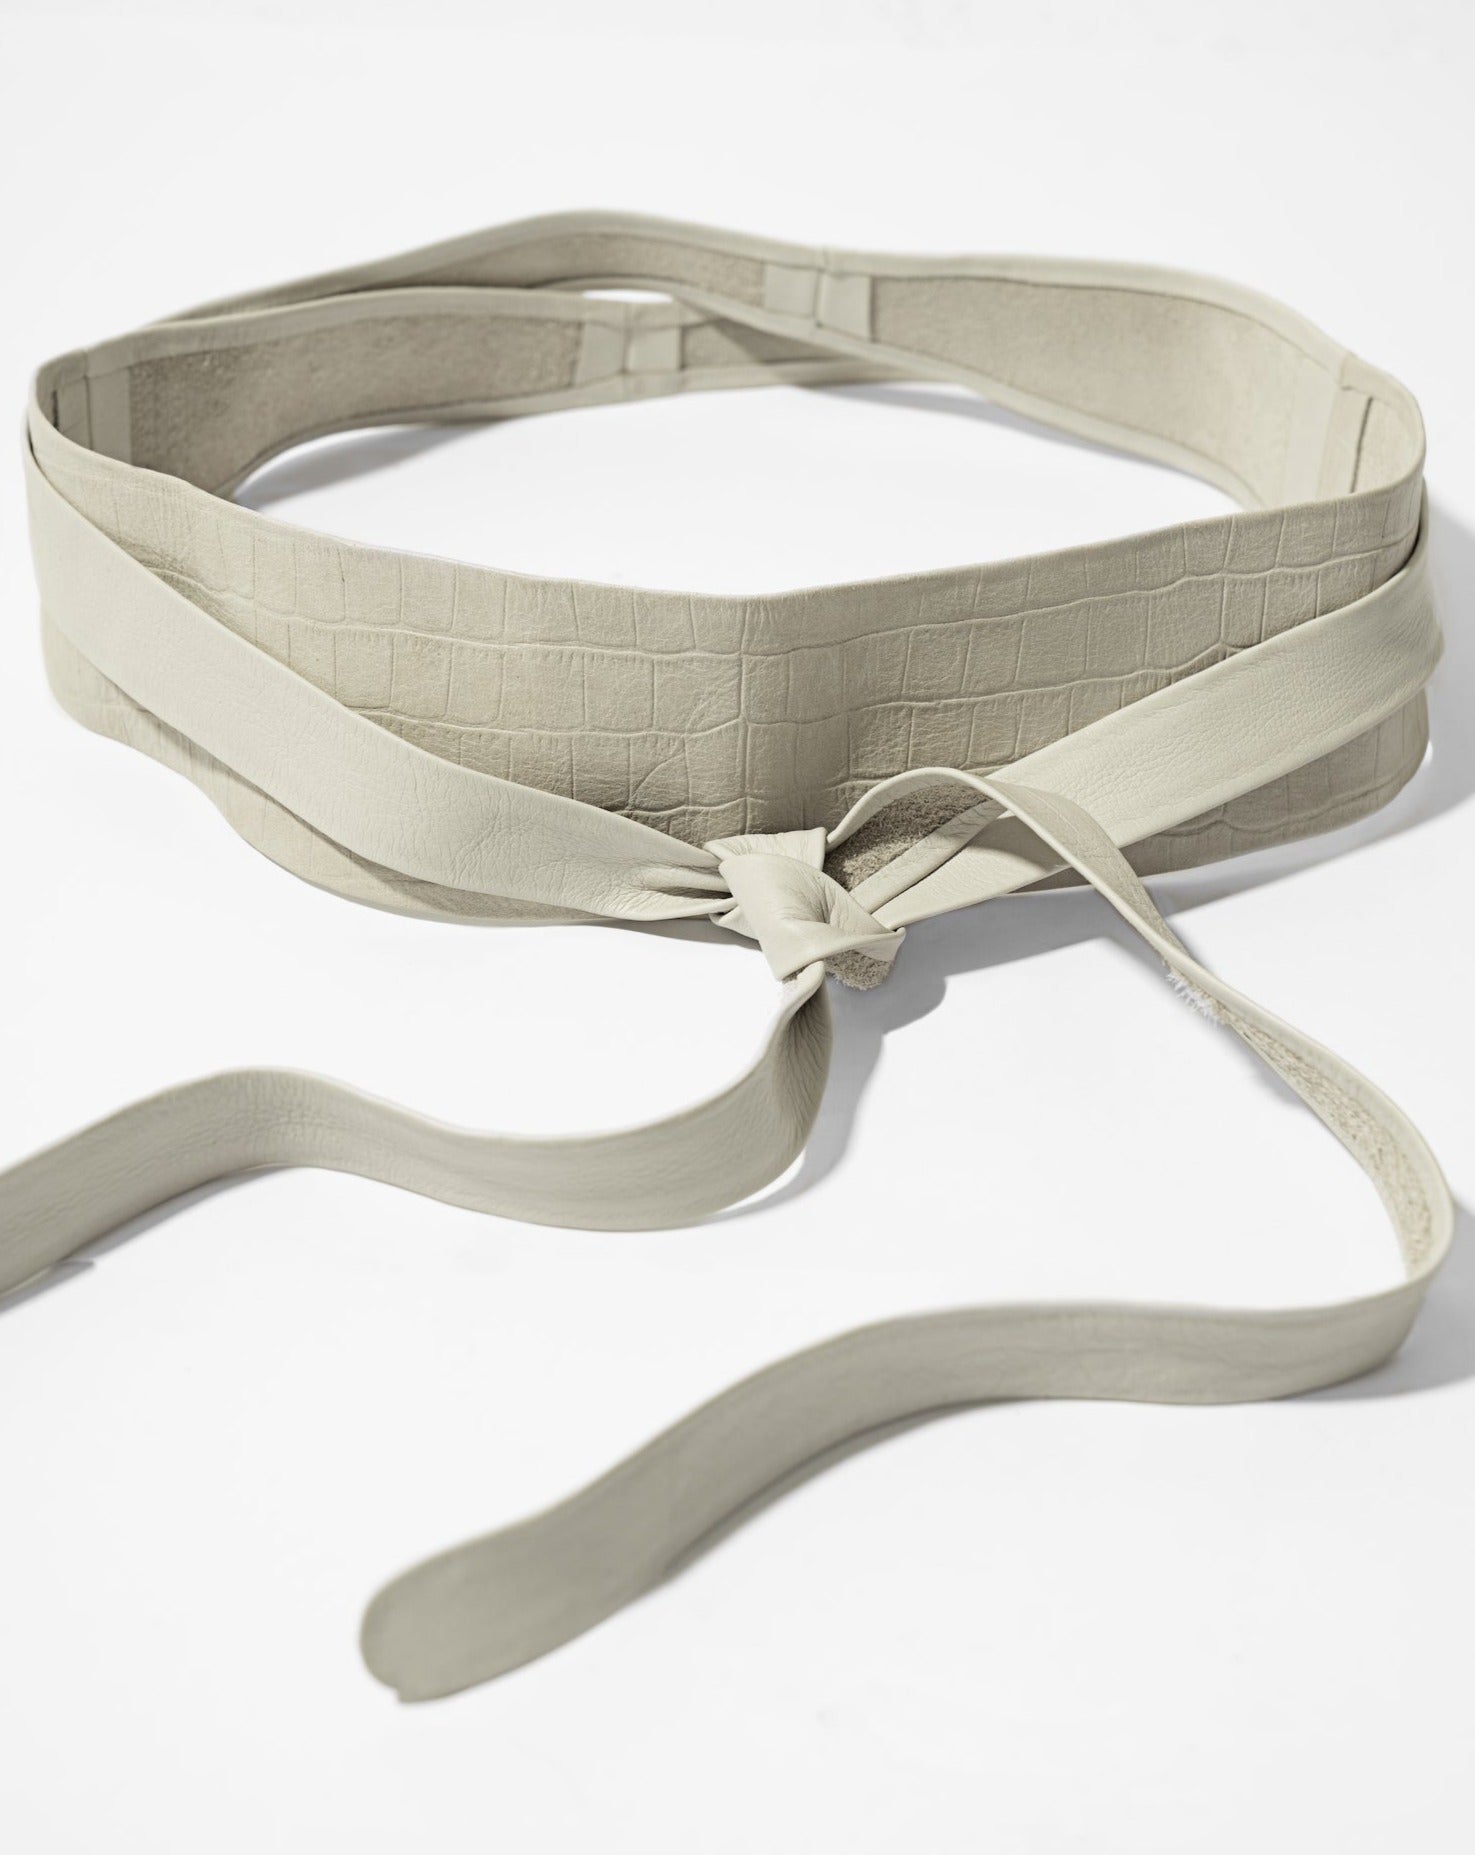 Wrap Leather Belt - Light Taupe Croco